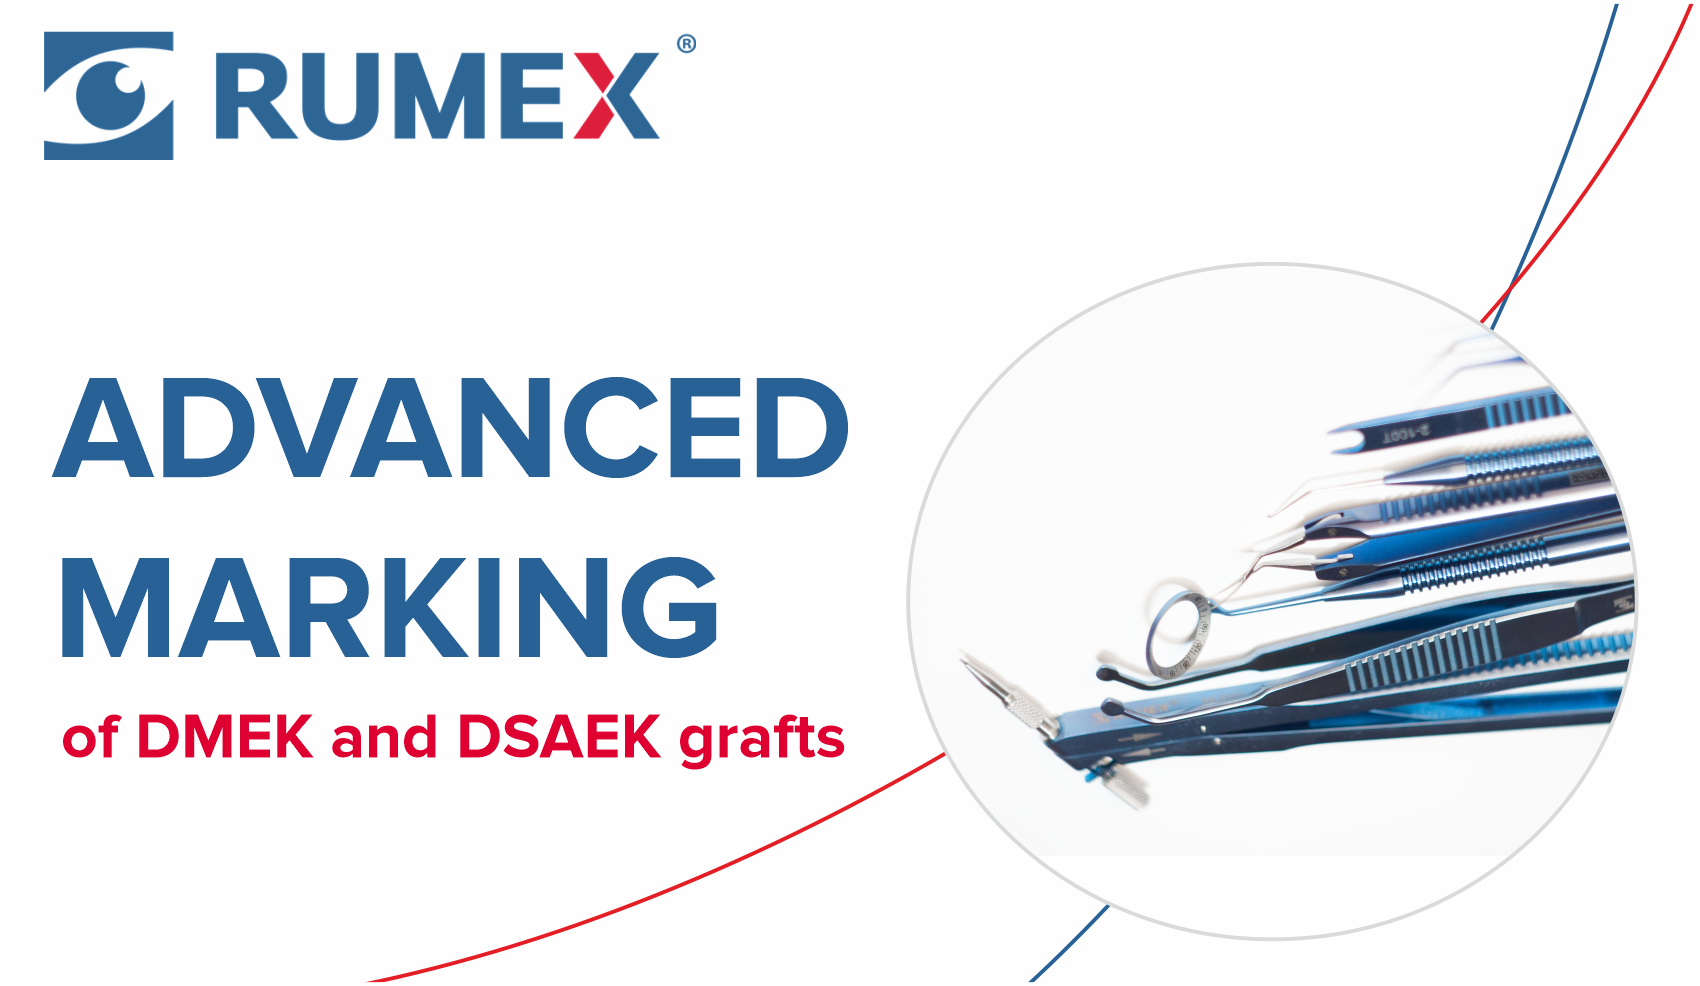 Advanced marking of DMEK and DSAEK grafts.